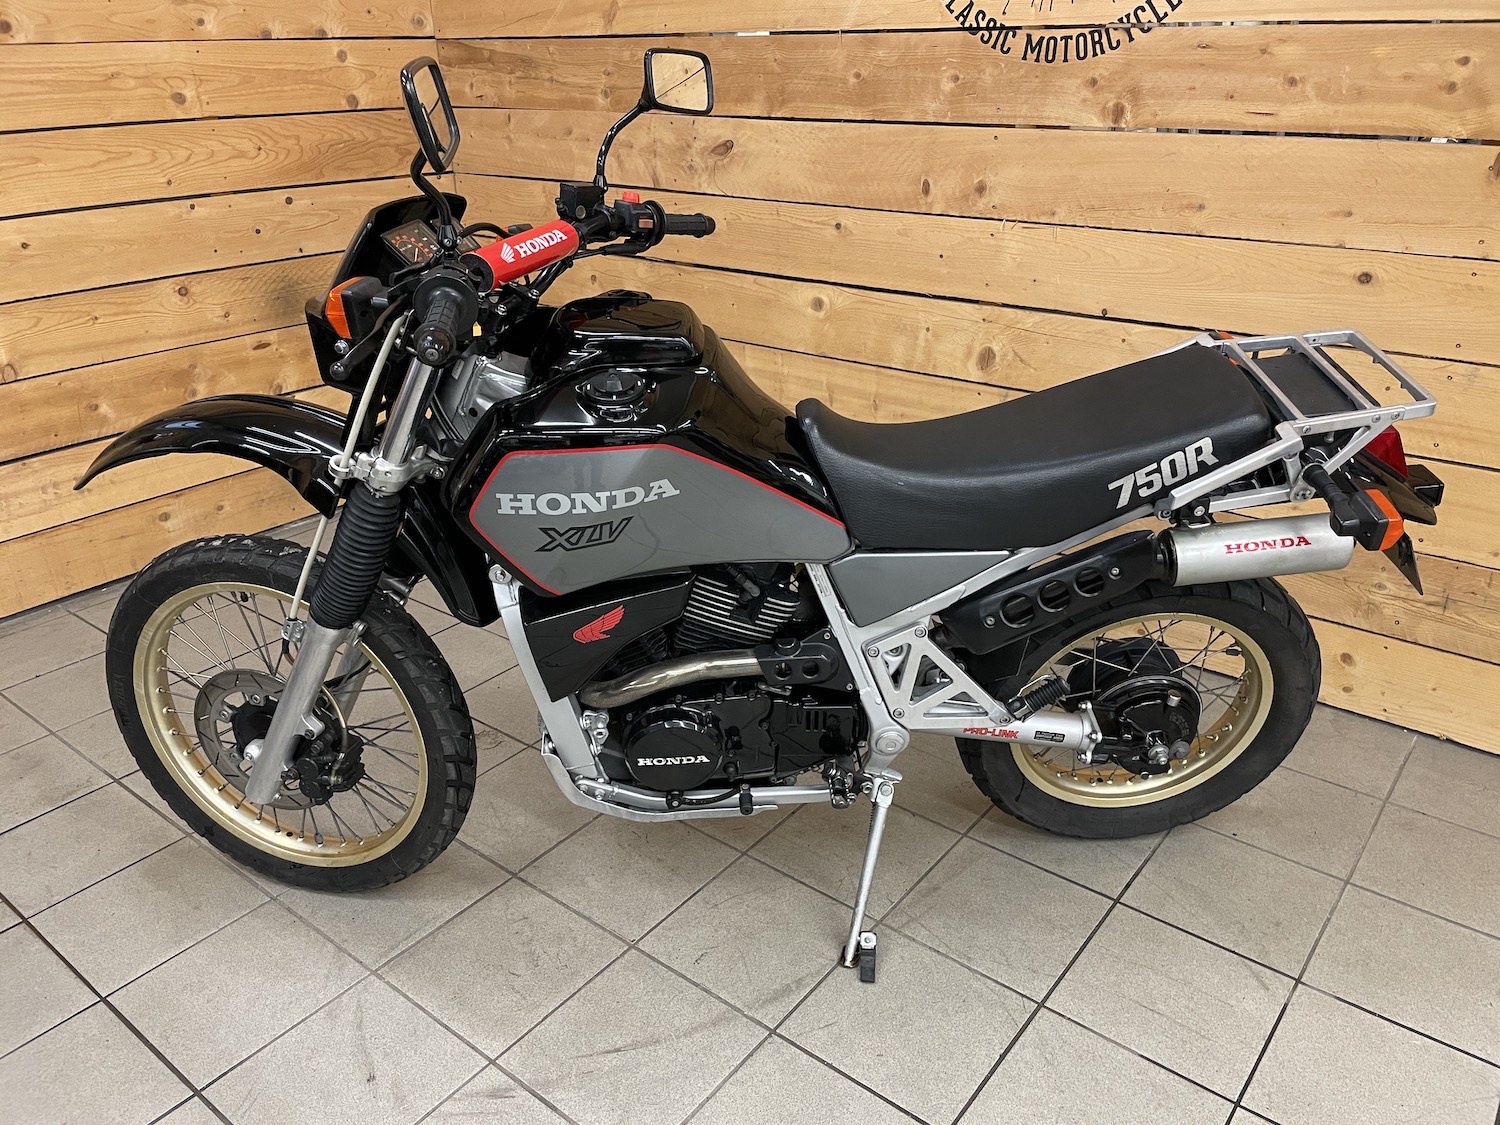 Honda_XLV_750R_cezanne_classic_motorcycles_6-118.jpg